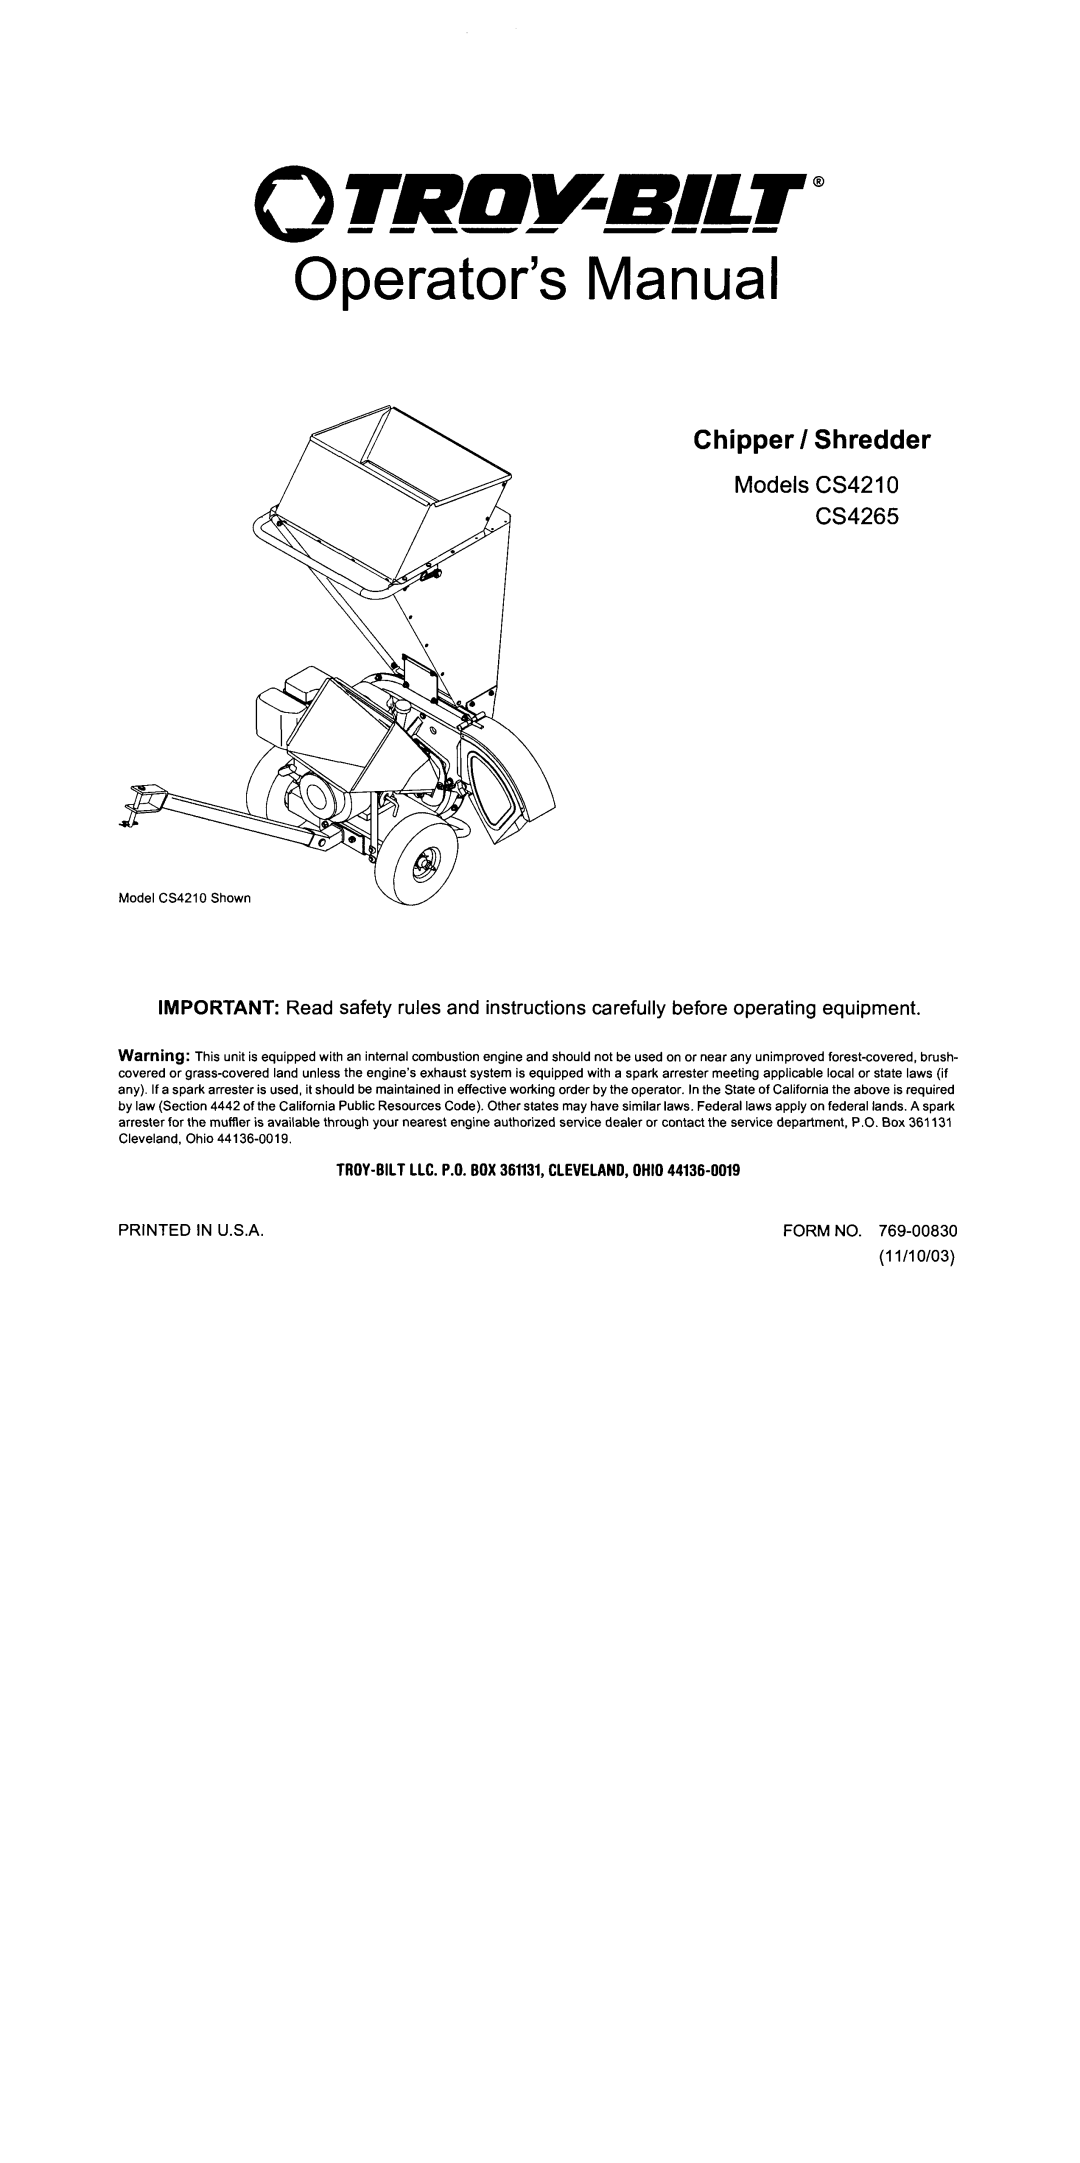 Troy-Bilt manual Operator’s Manual, Chipper / Shredder, Models CS4210 CS4265 